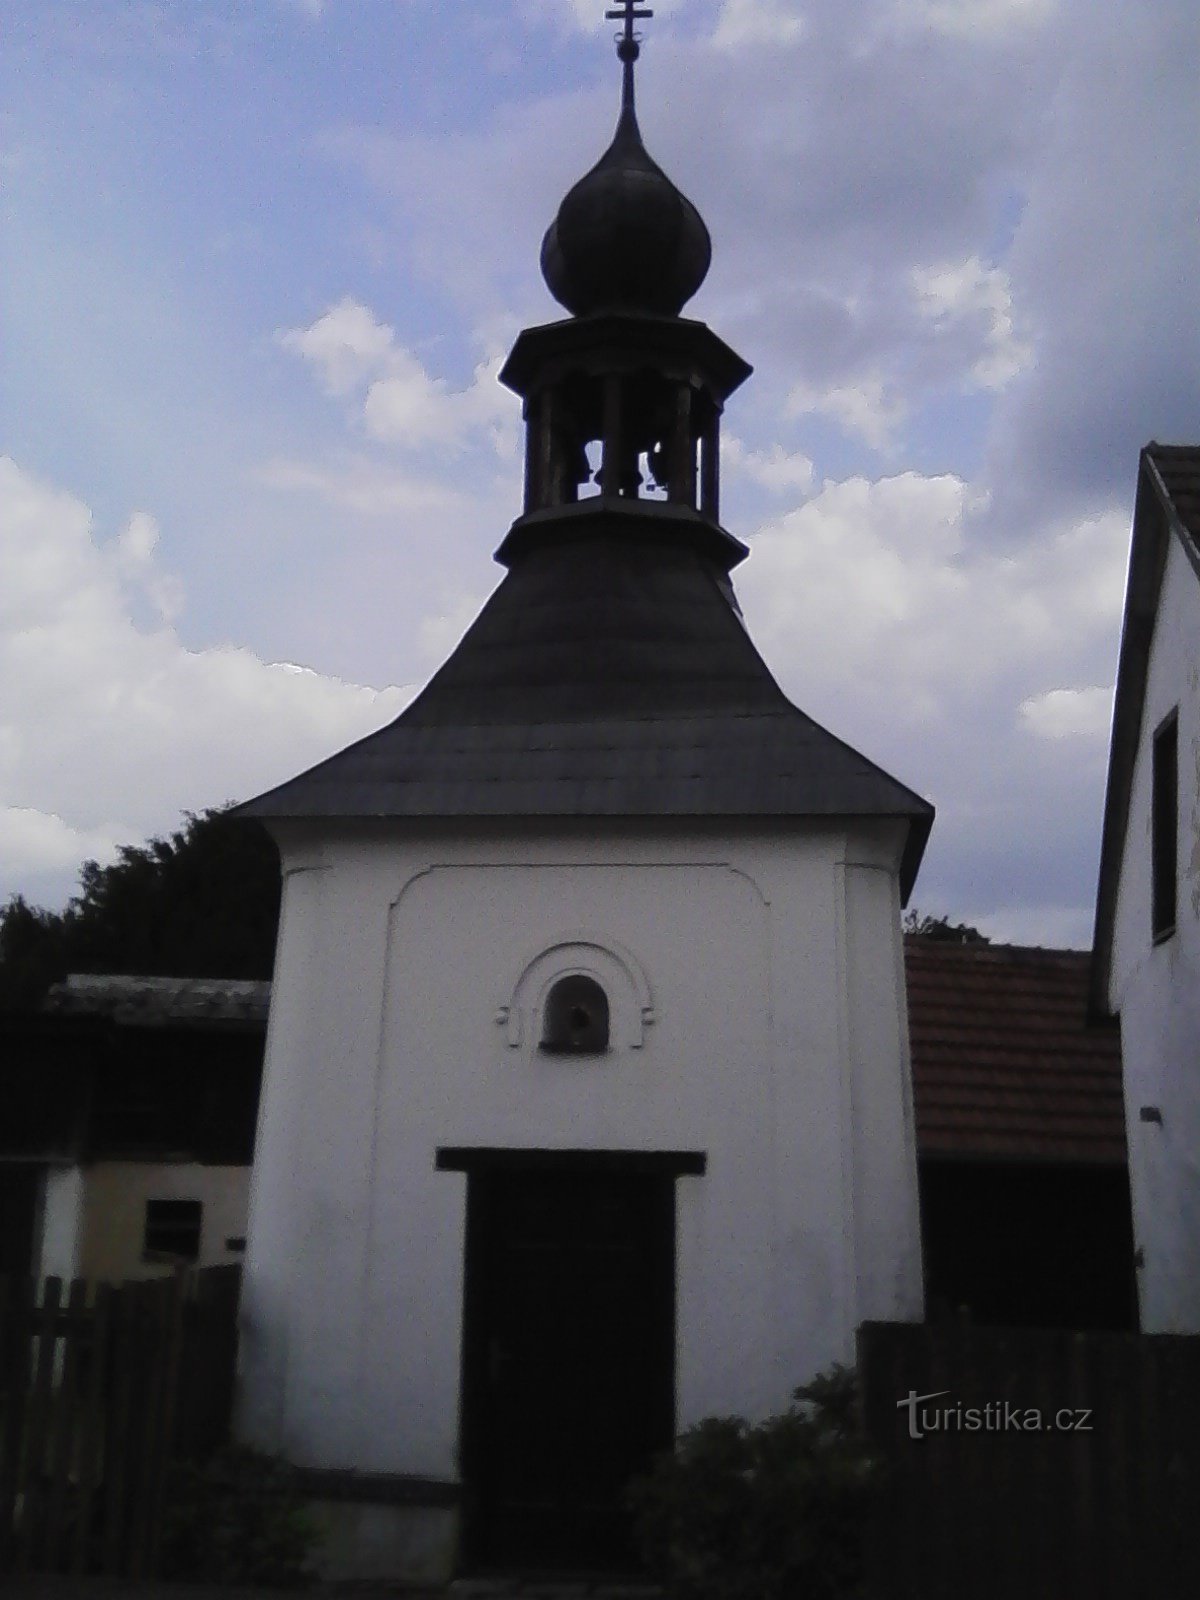 2. Wiejska kaplica w Horních Hořicach.